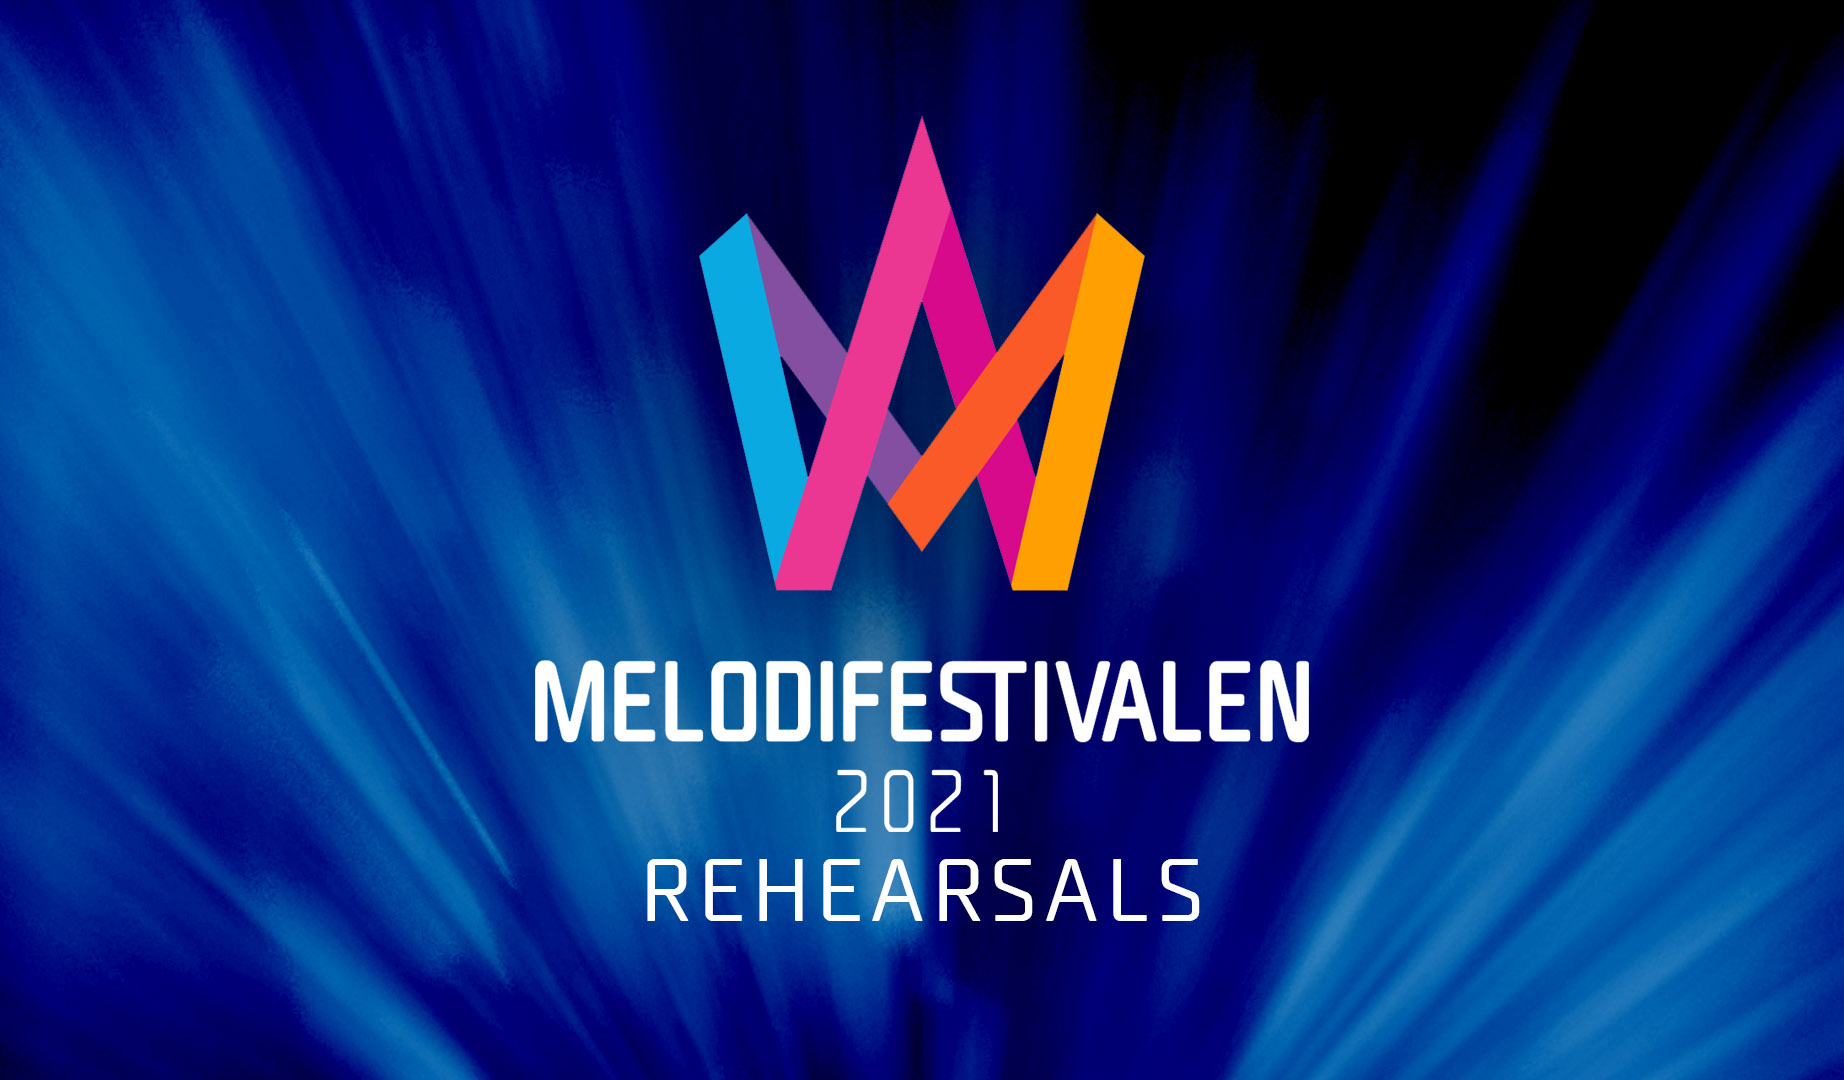 Sweden: First look of Melodifestivalen’s first semi-final rehearsals